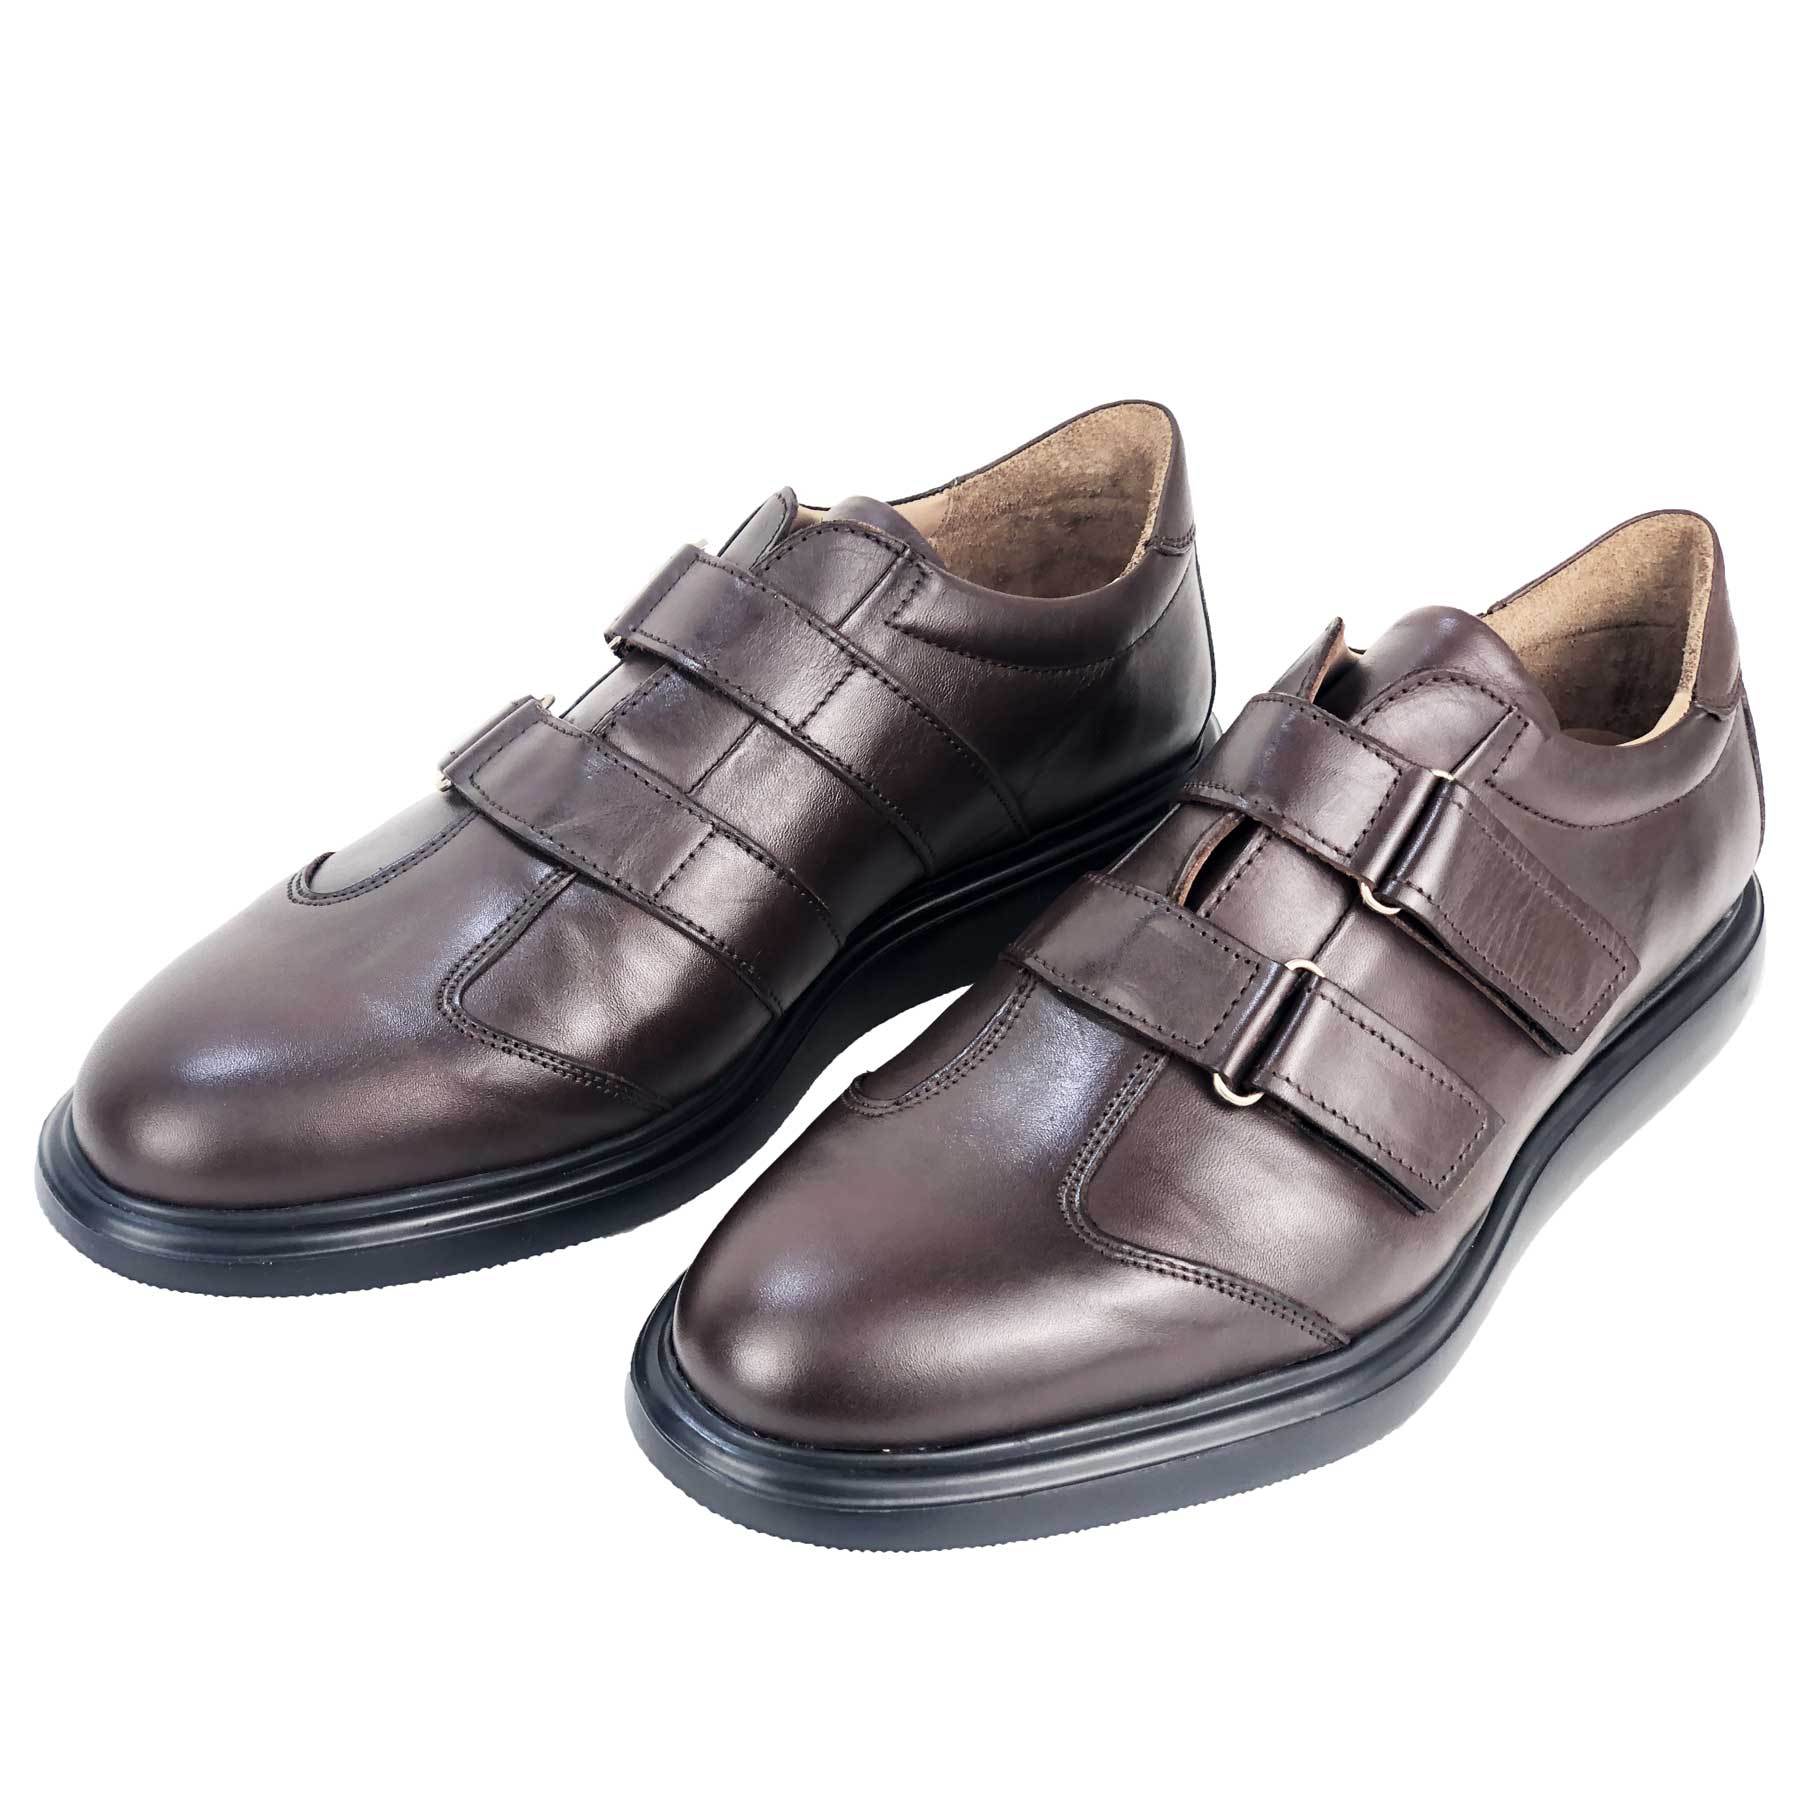 BSK462-015 - Chaussure cuir MARRON - deluxe-maroc